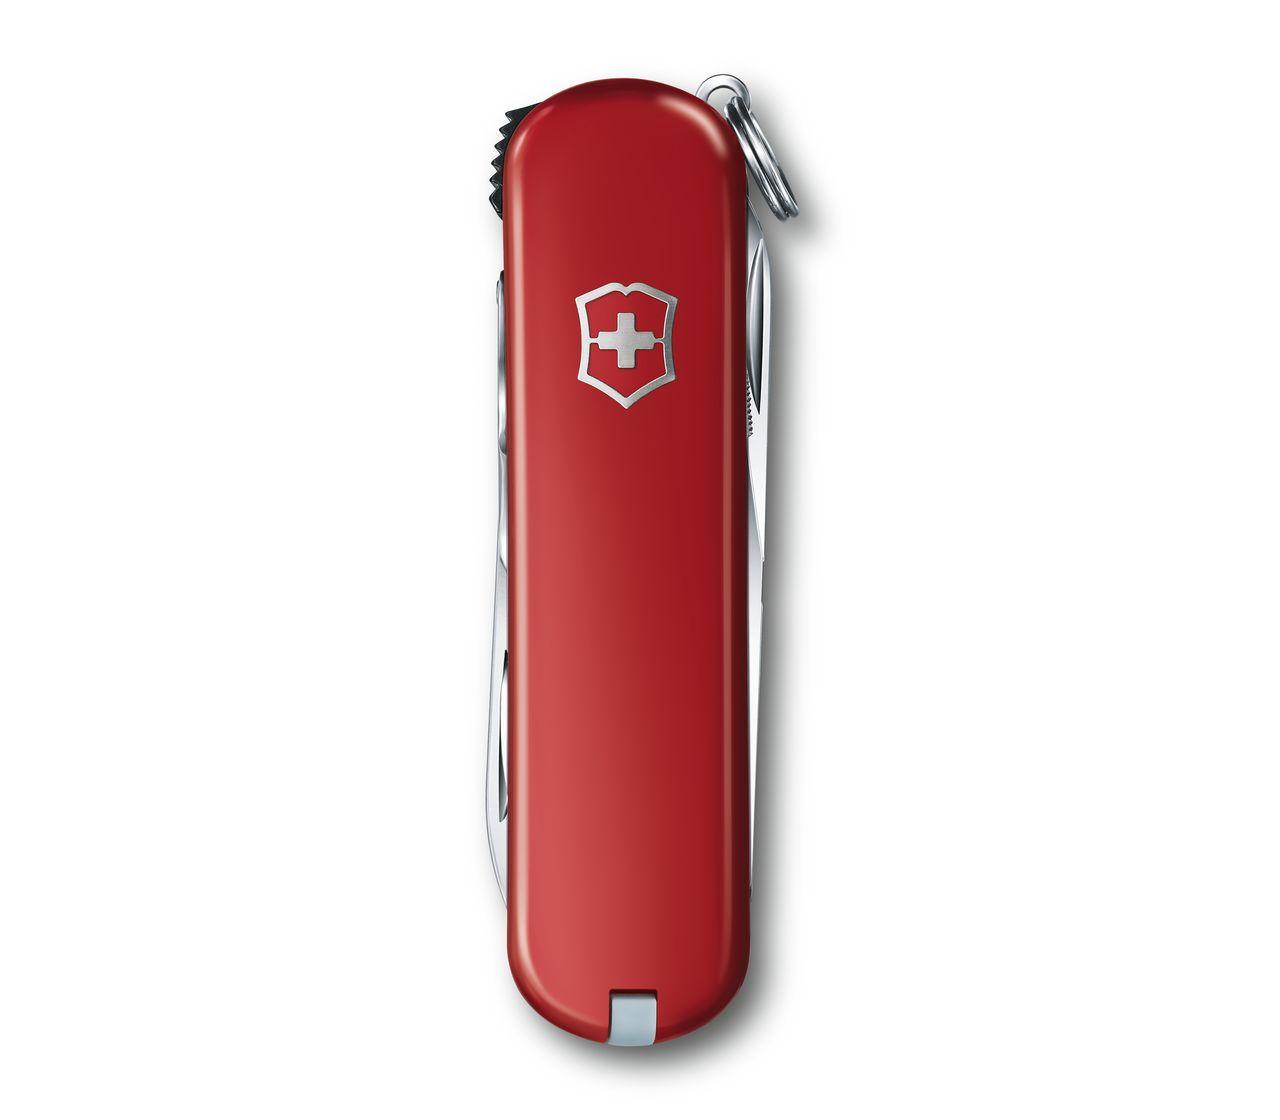 Victorinox Swiss Army Pocket Nail Clip 582 Red - 0.6453 